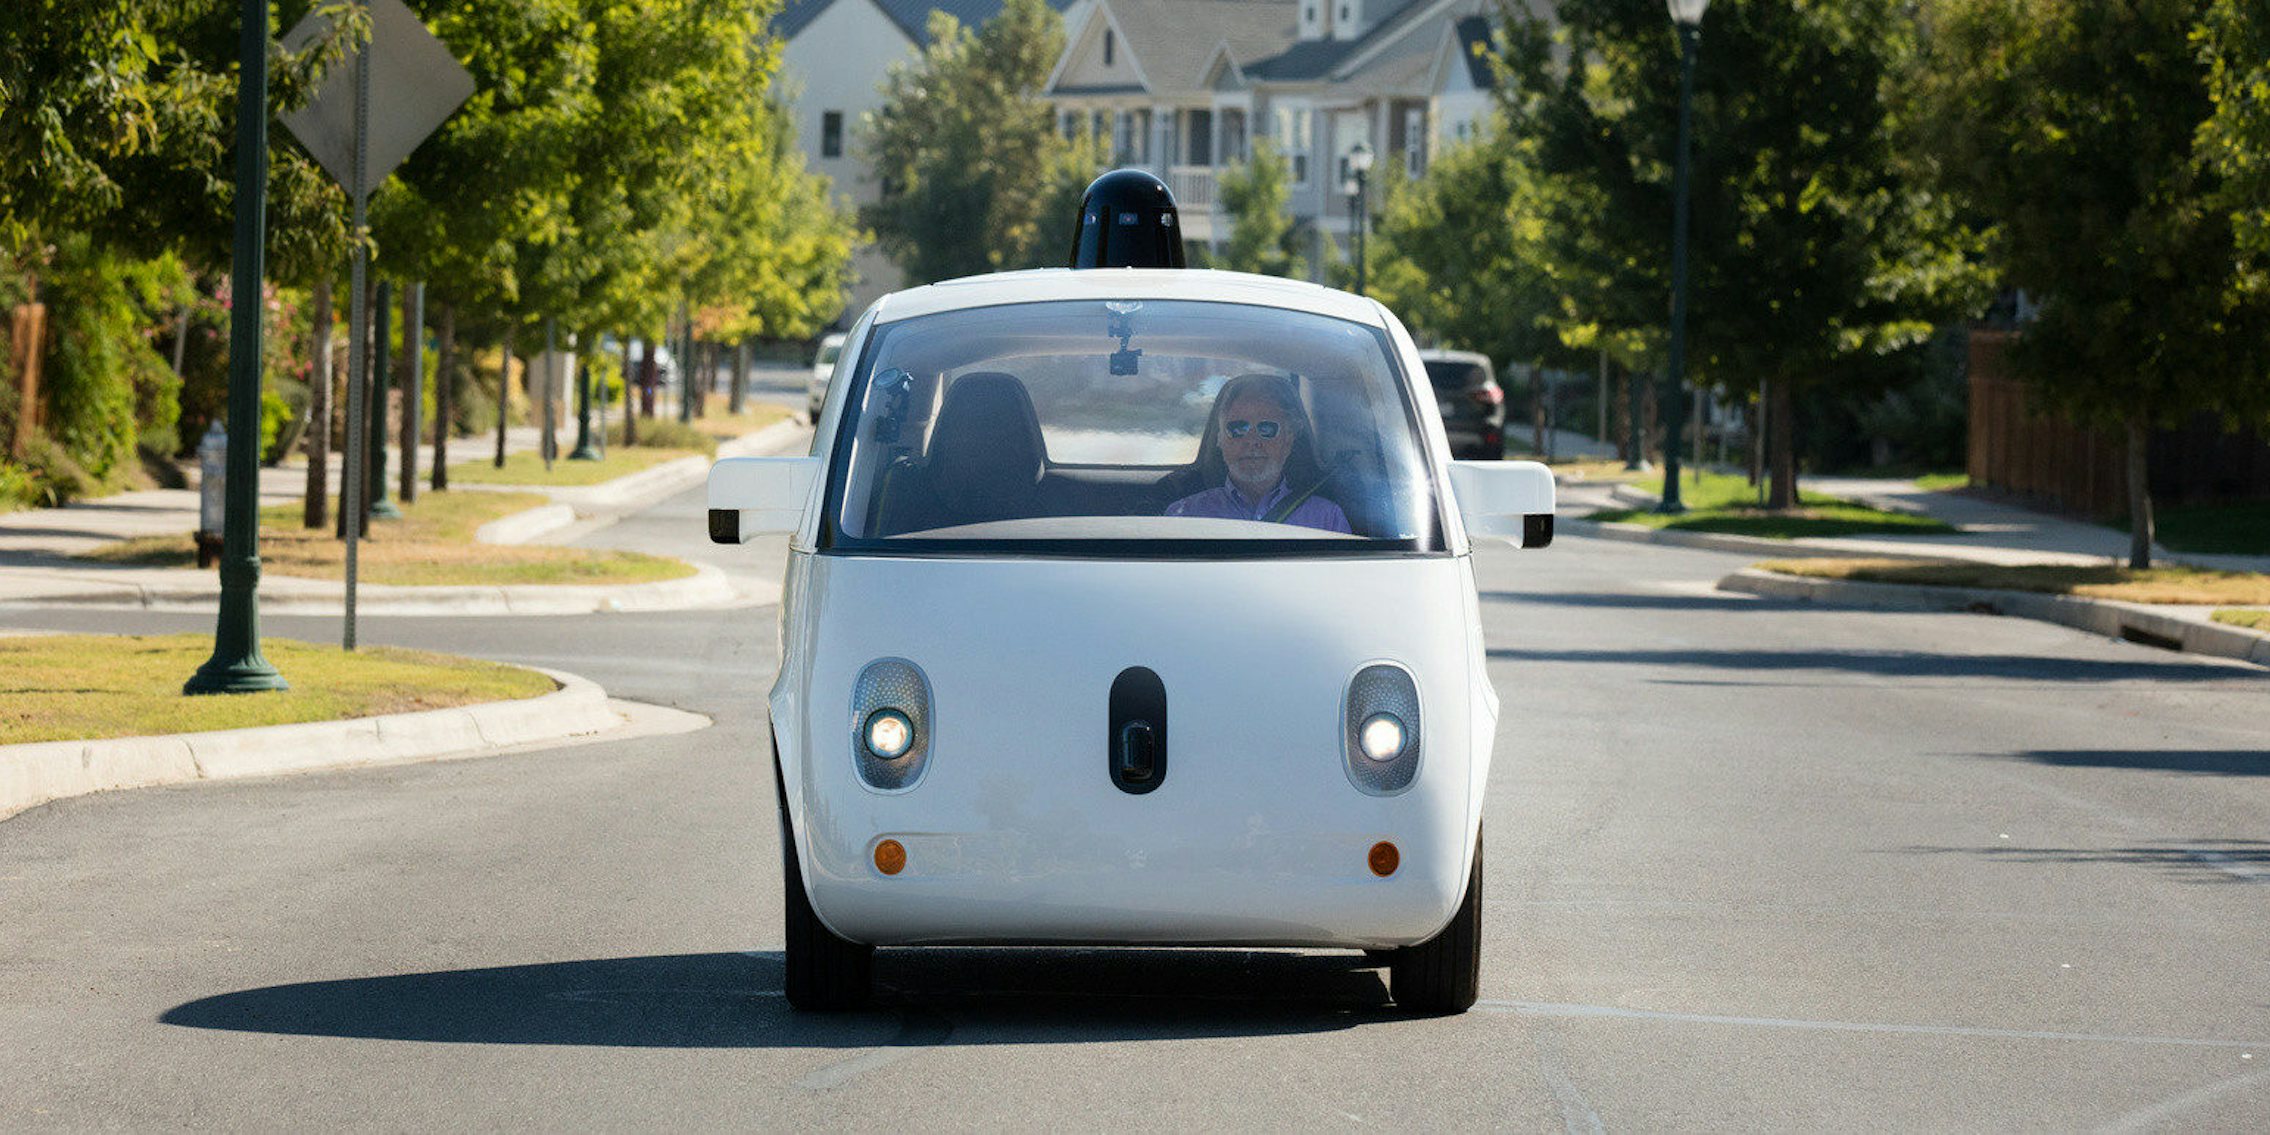 Google Waymo self driving car on street